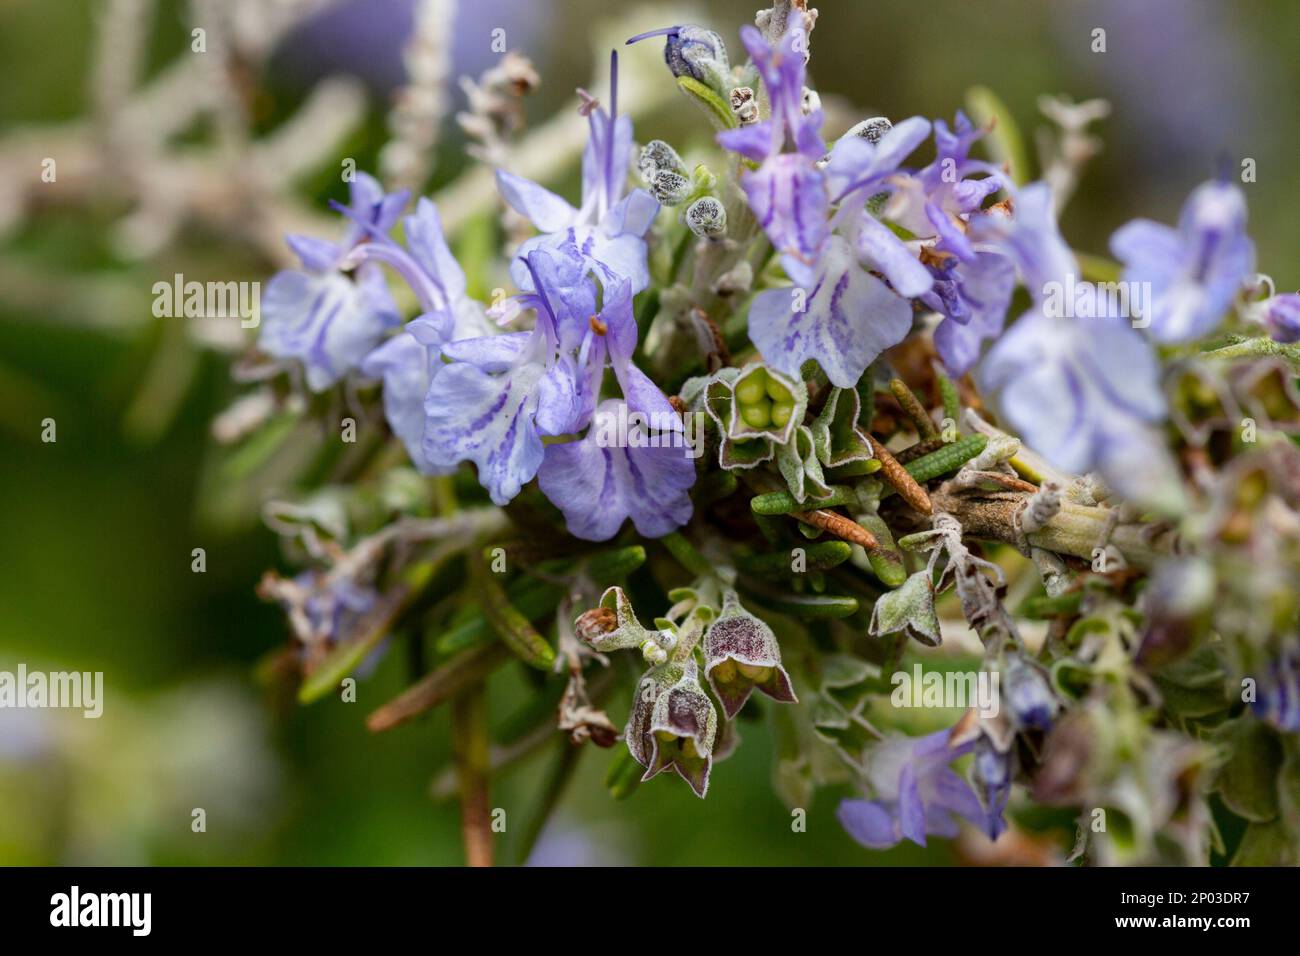 Honey bee on a blooming rosemary bush, Rosmarinus officinalis, blue flowers macro. Stock Photo